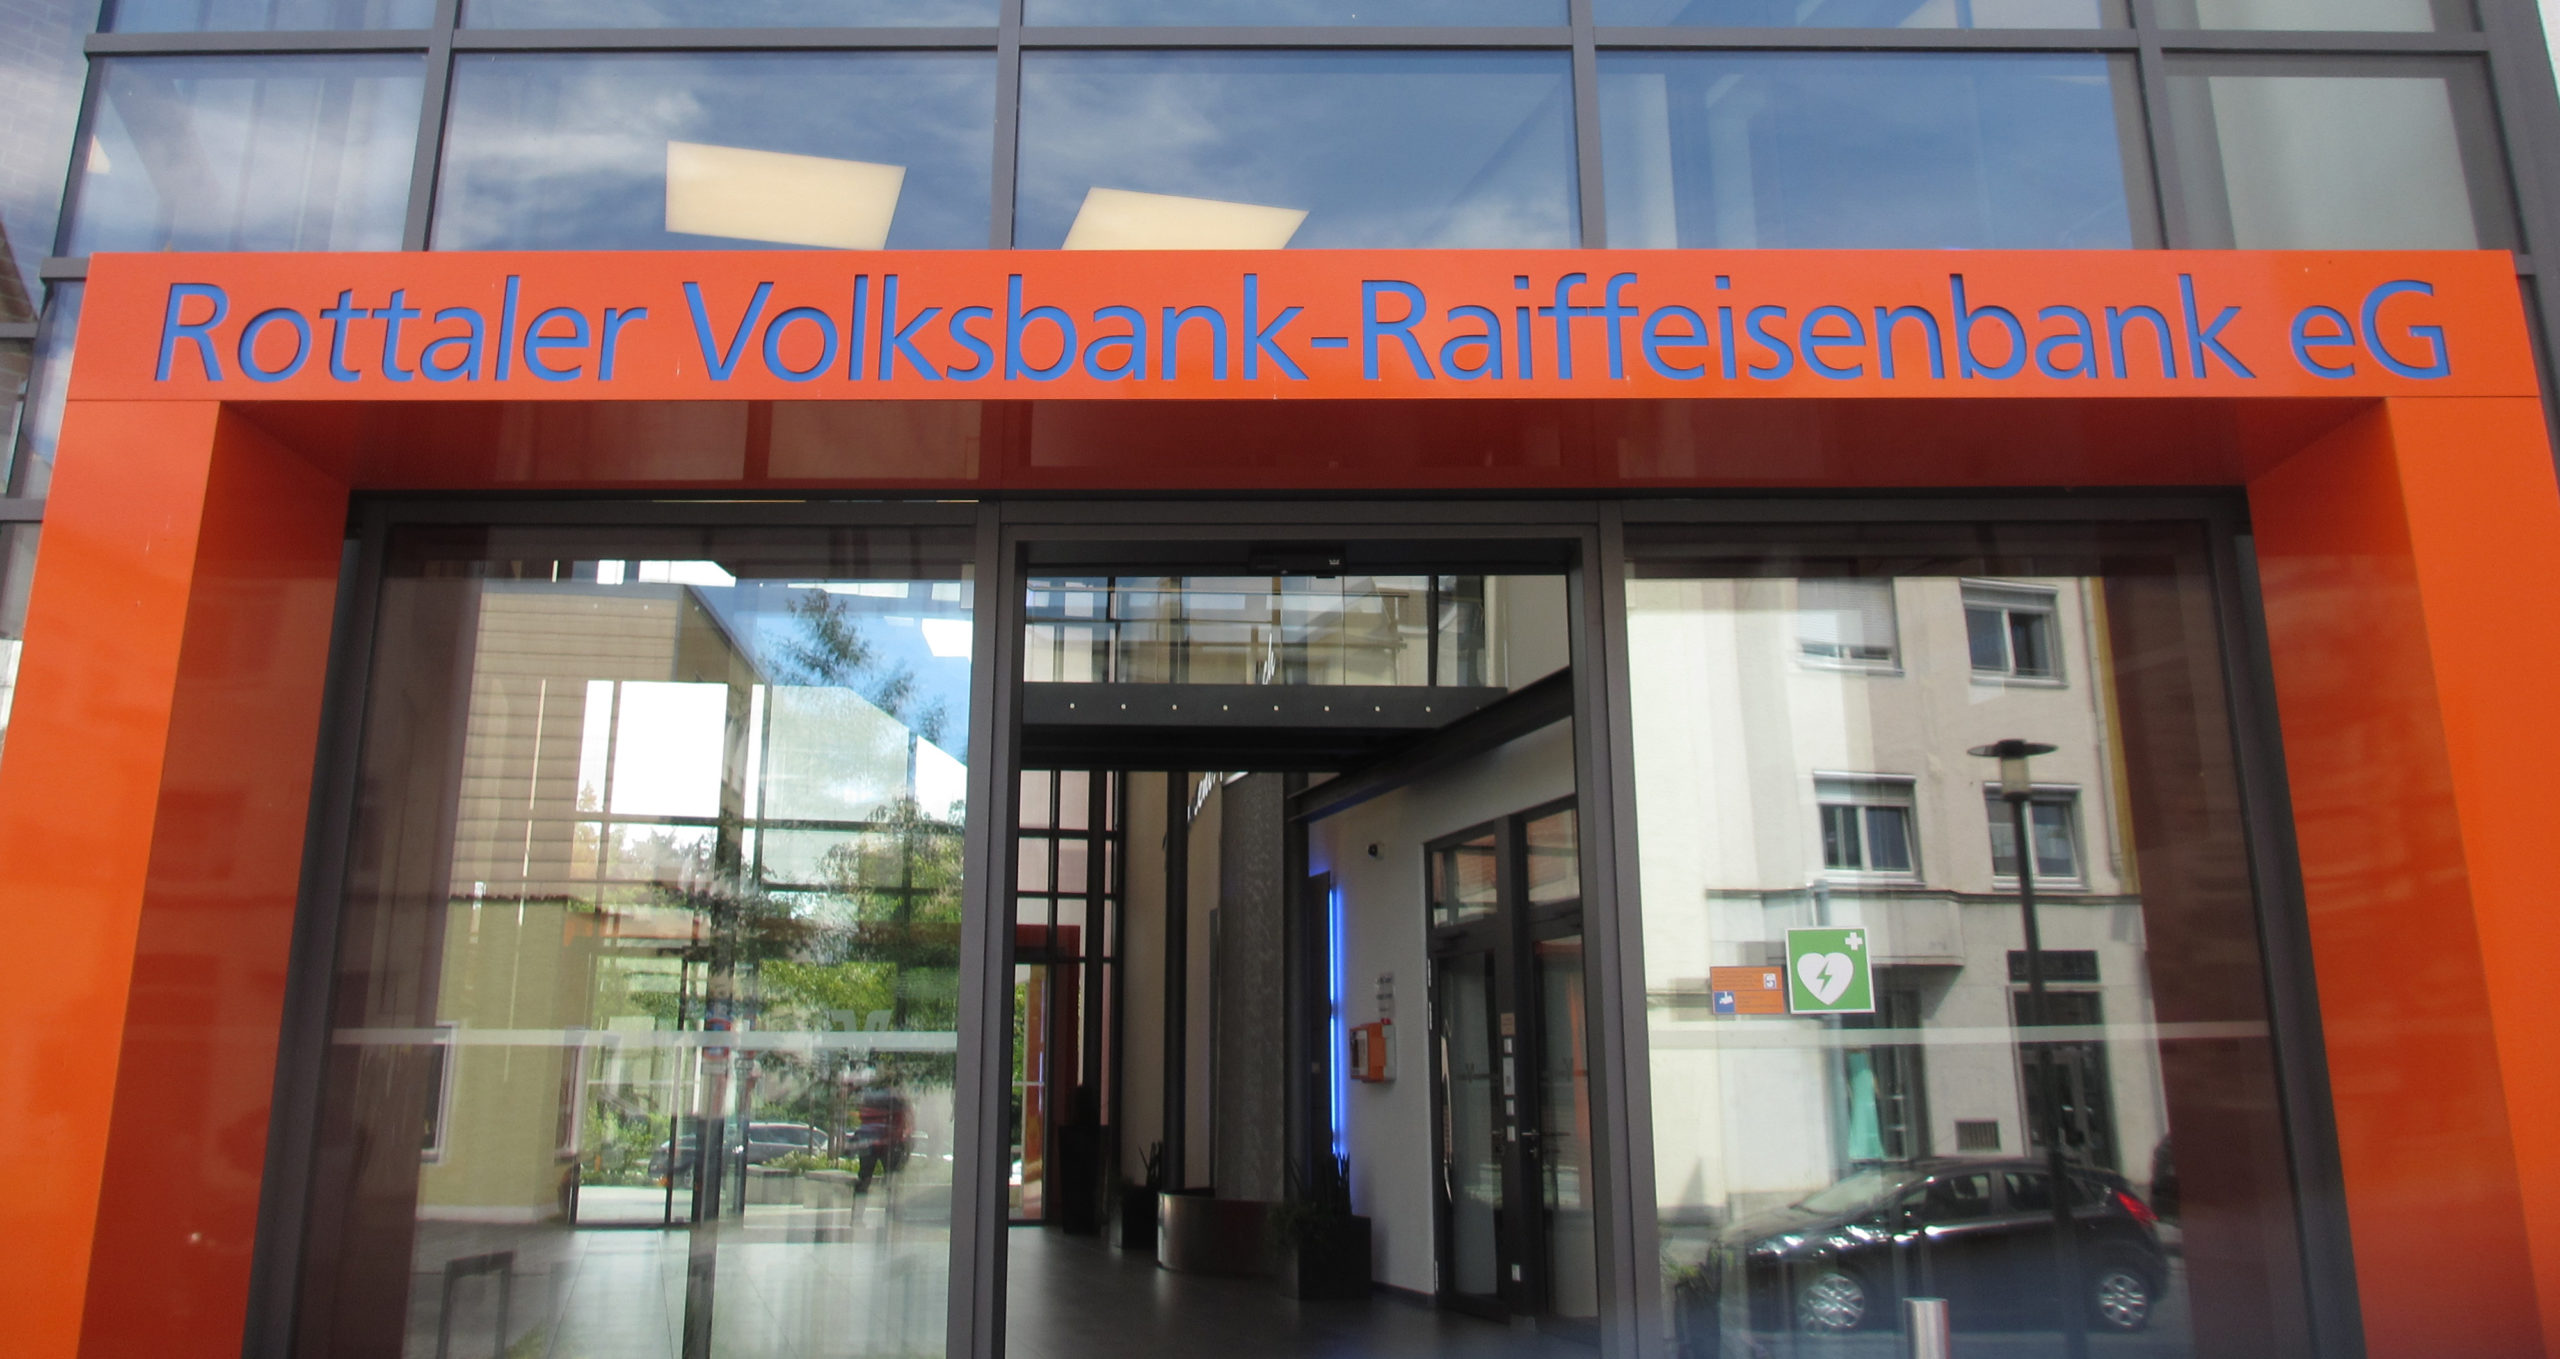 Rottaler Volksbank-Raiffeisenbank eG Portal